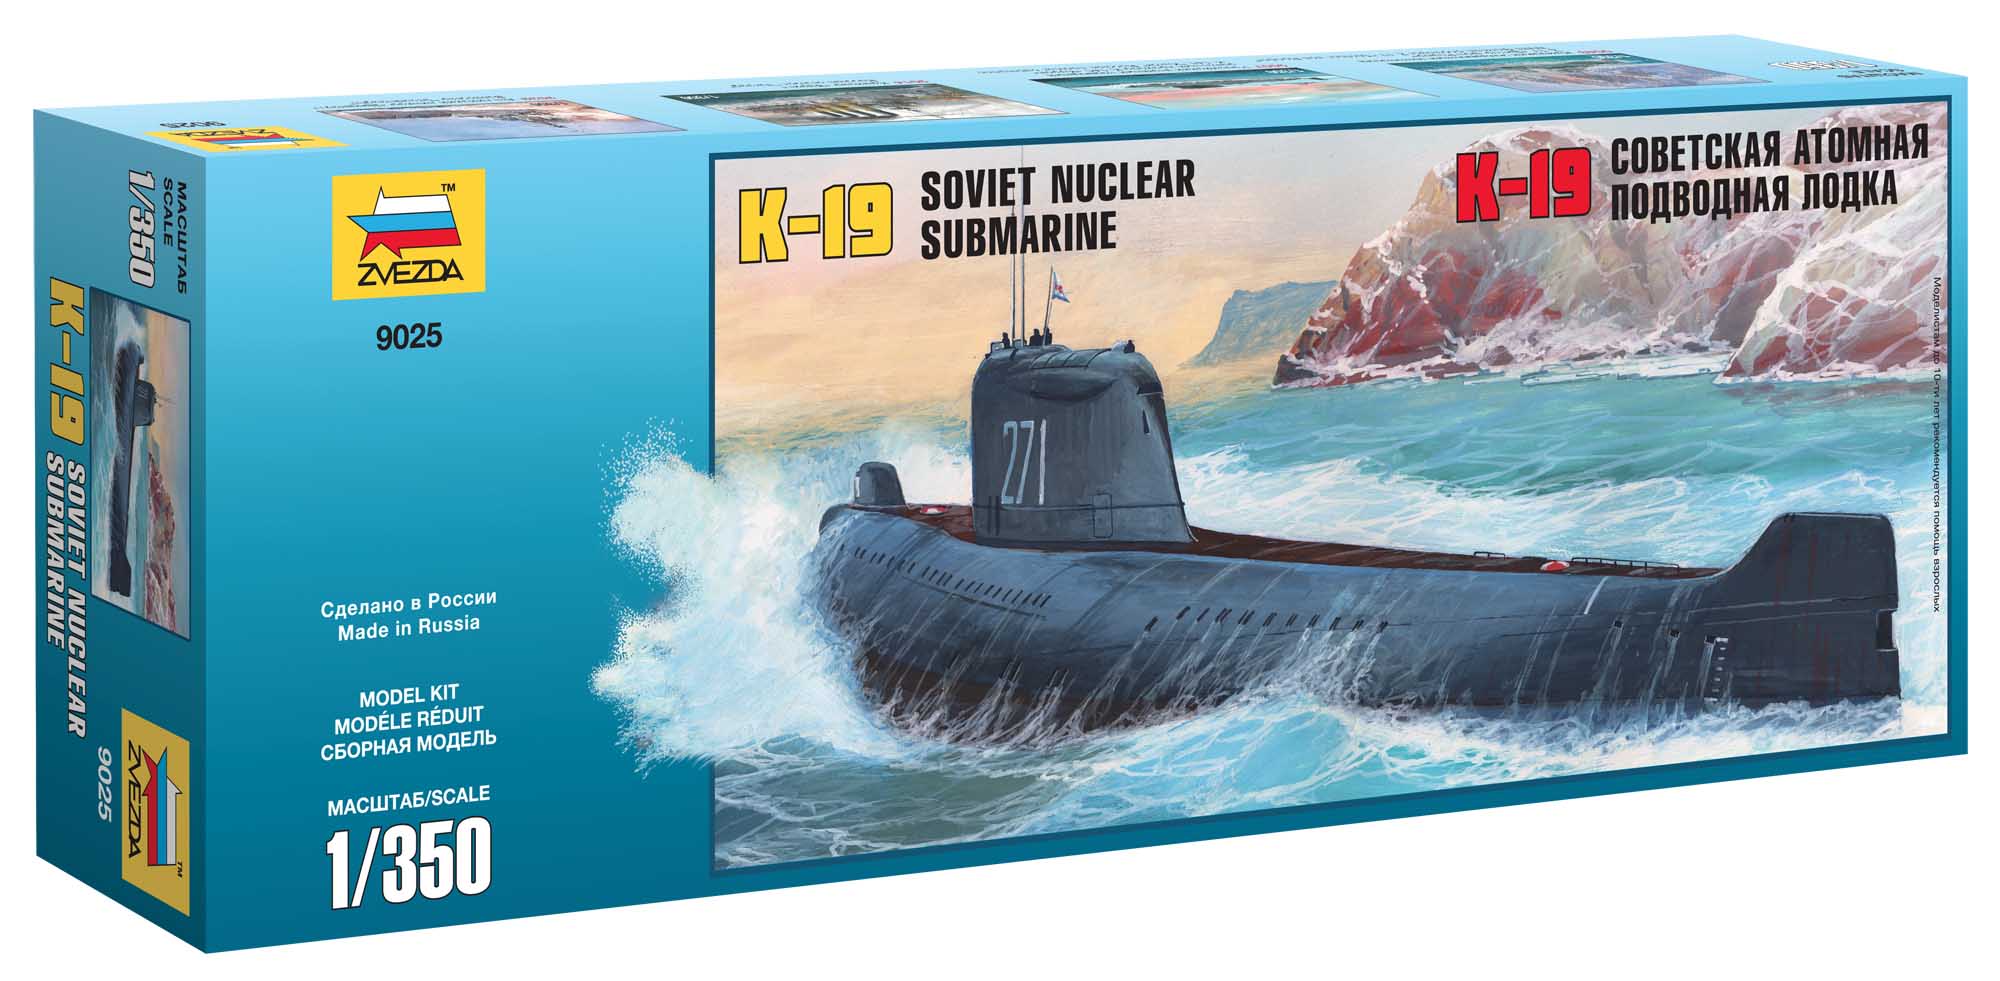 Zvezda 9025 - K-19 Soviet Nuclear Submarine 